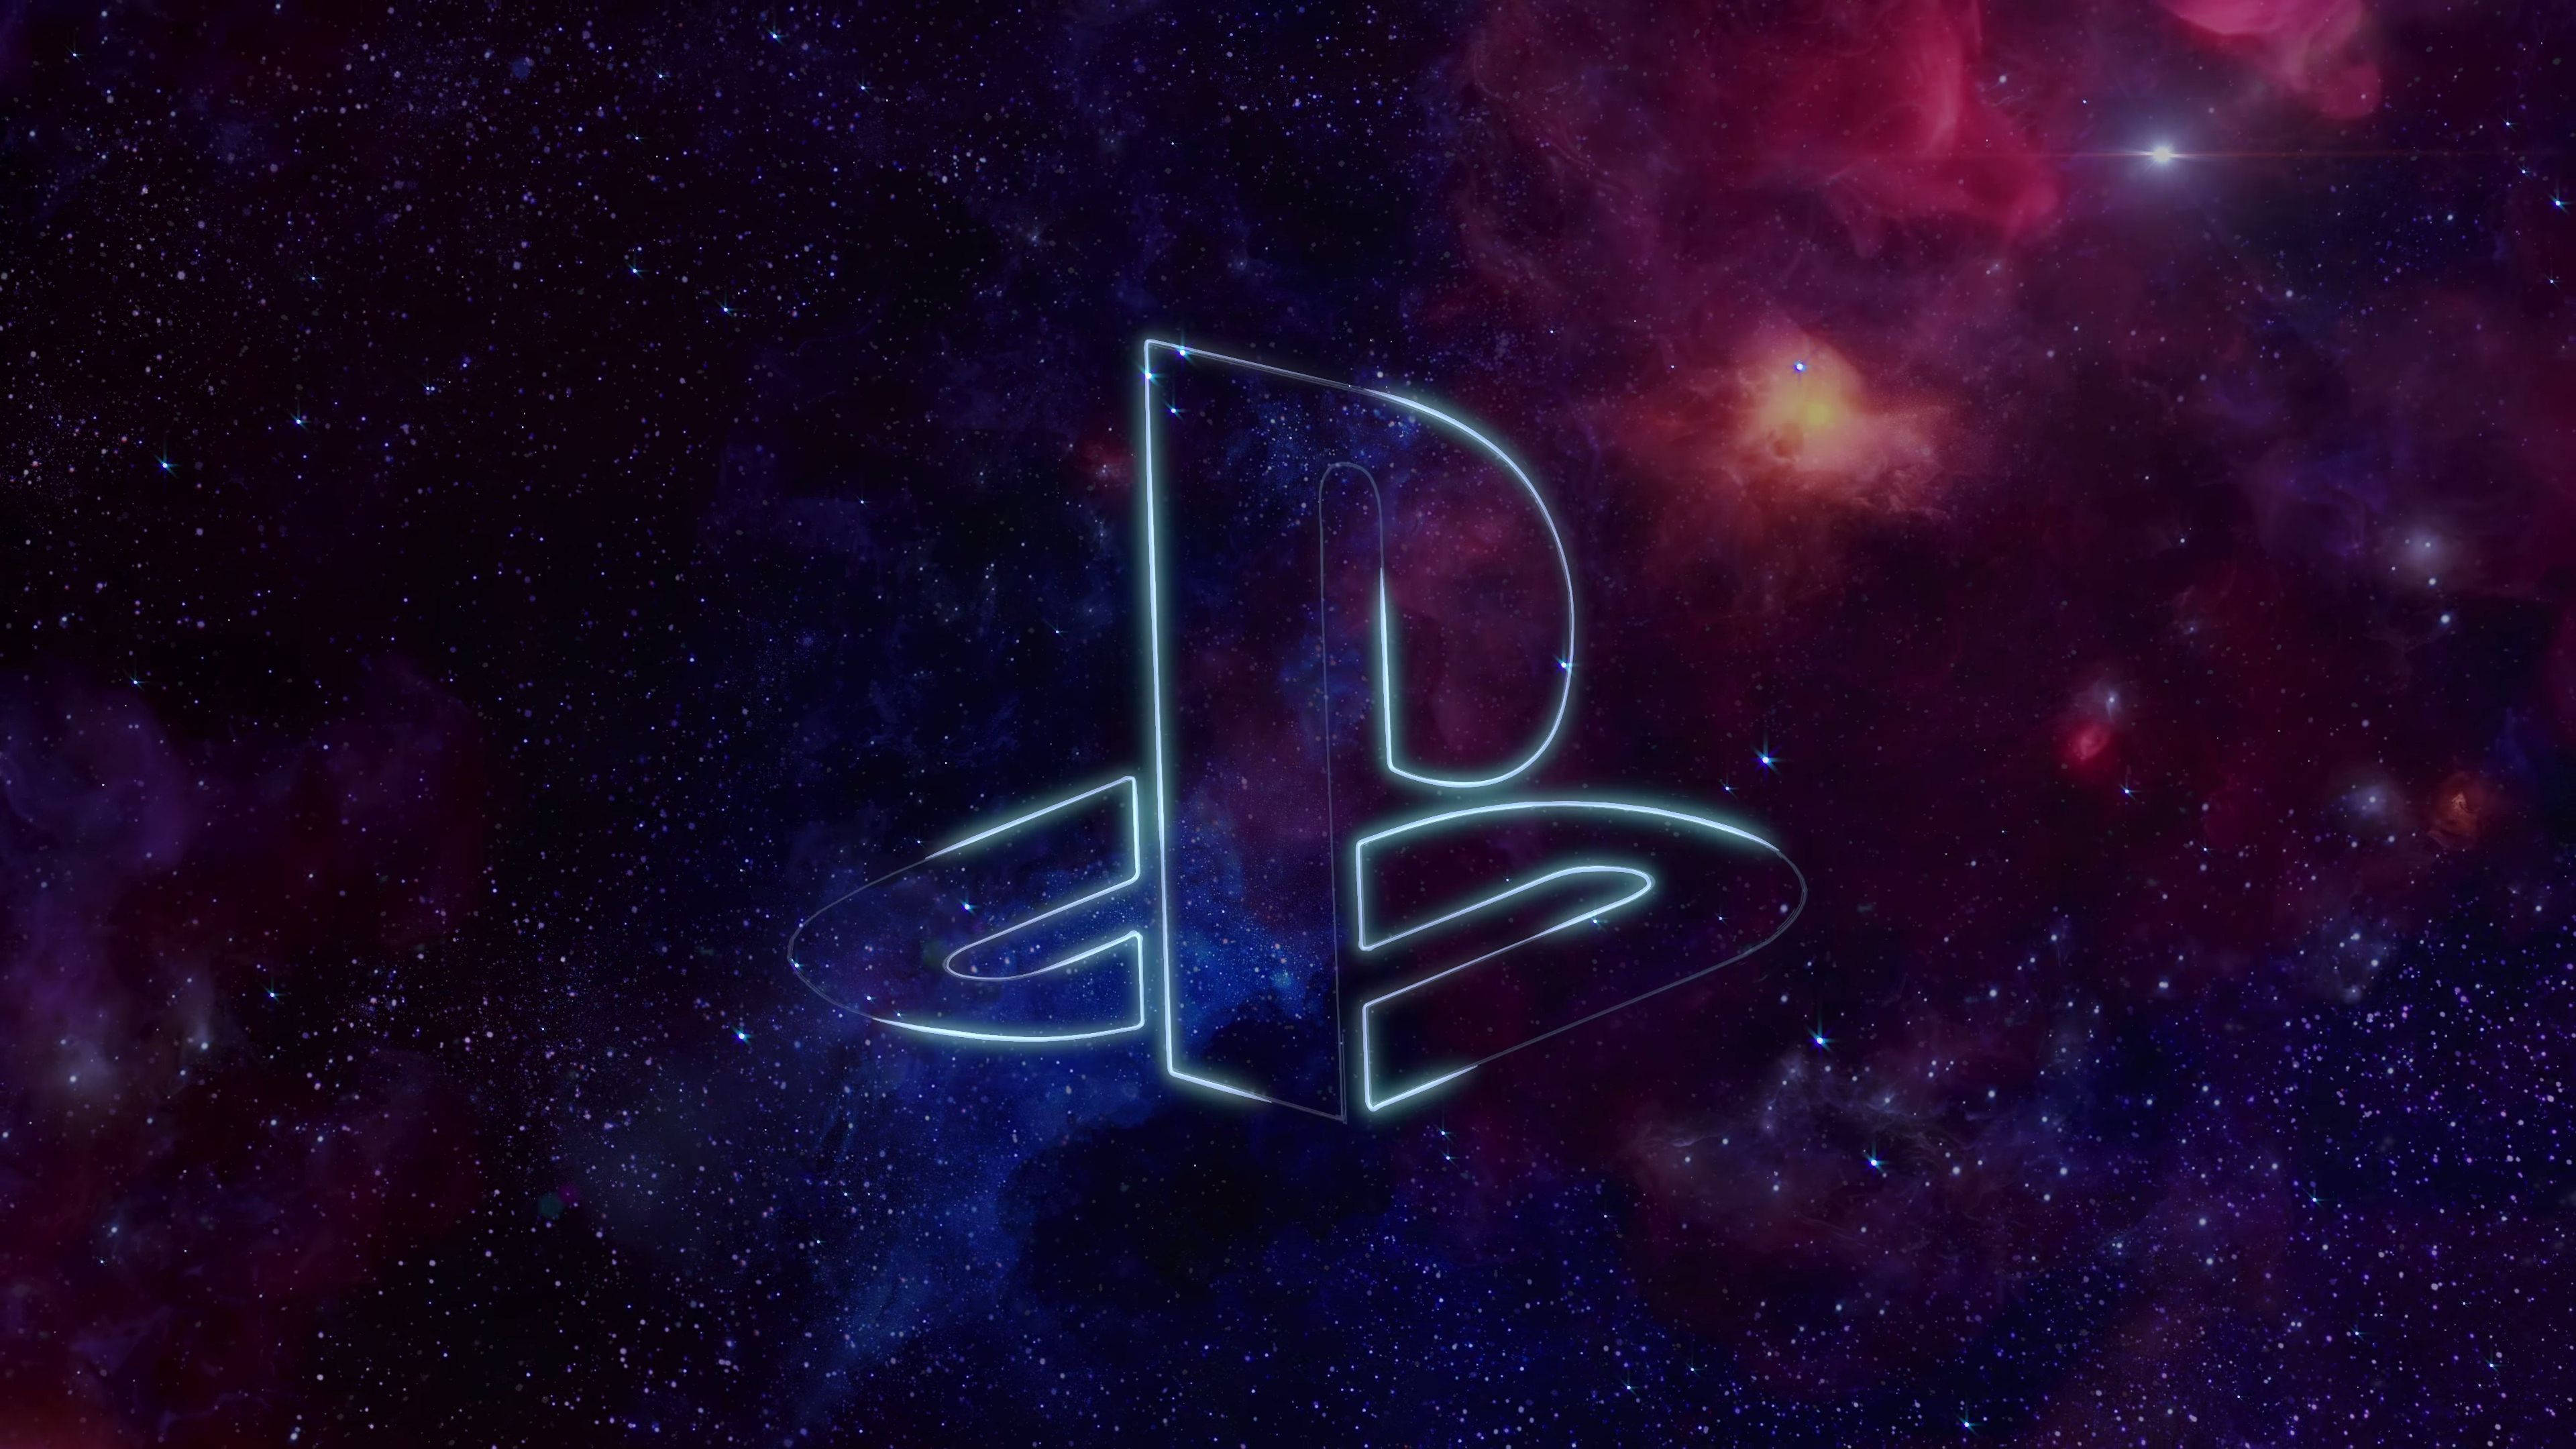 PS4 Logo Galaxy Art Wallpaper